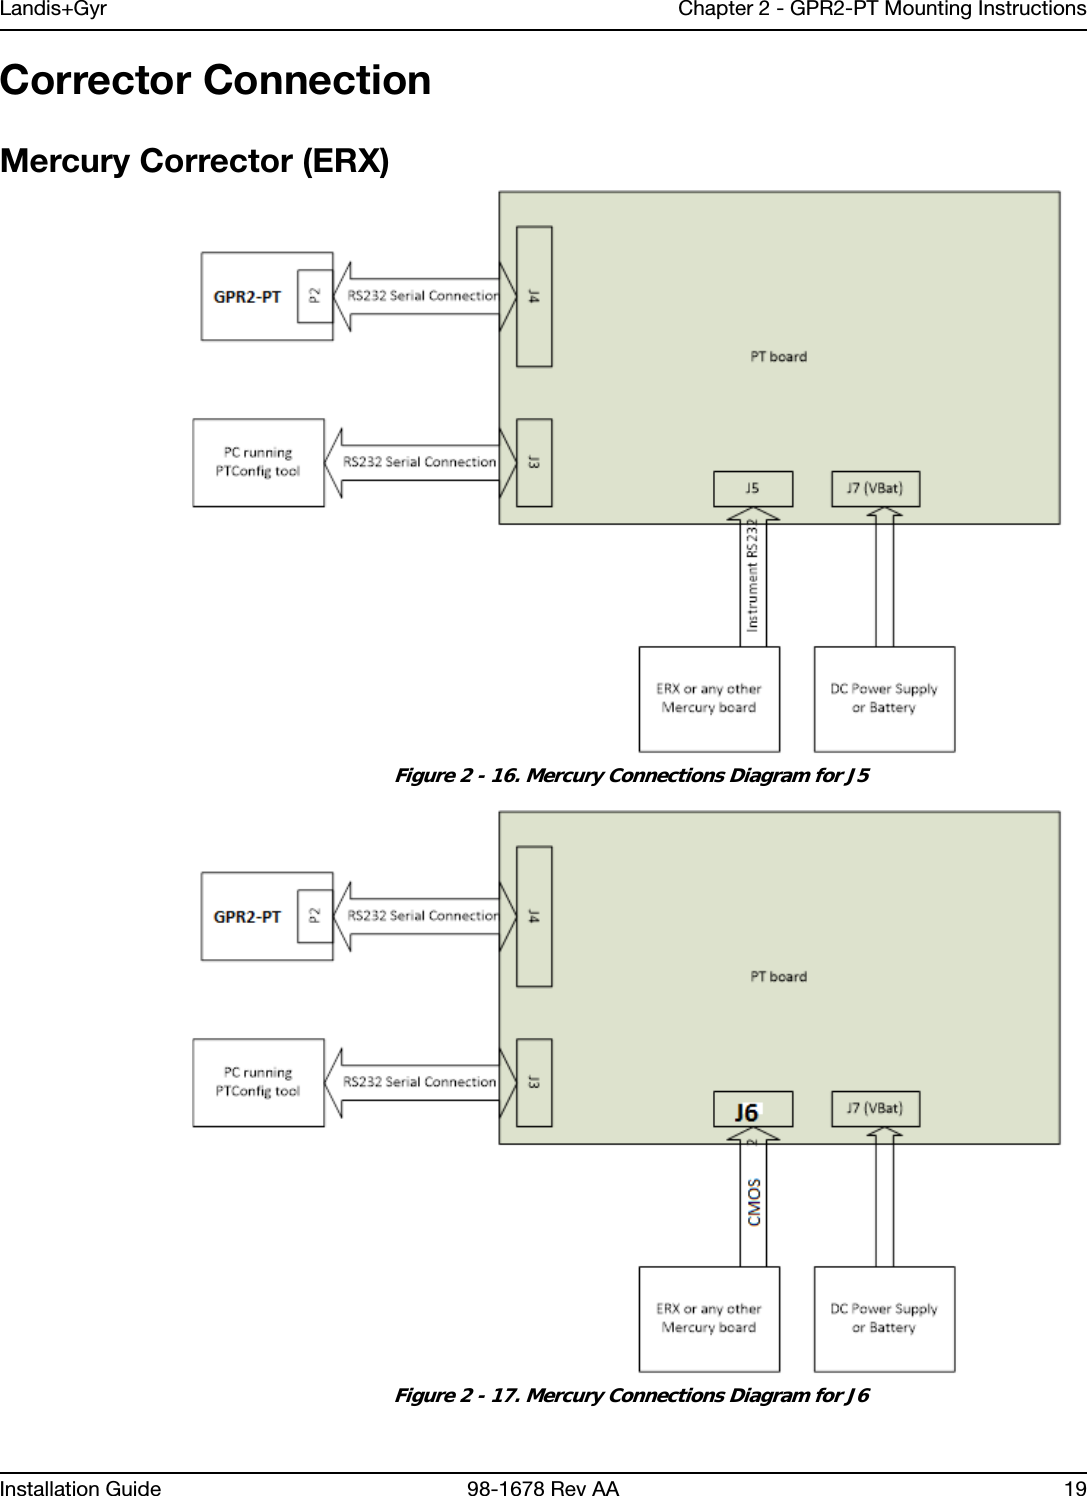 Landis+Gyr Chapter 2 - GPR2-PT Mounting InstructionsInstallation Guide 98-1678 Rev AA 19Corrector ConnectionMercury Corrector (ERX) Figure 2 - 16. Mercury Connections Diagram for J5 Figure 2 - 17. Mercury Connections Diagram for J6